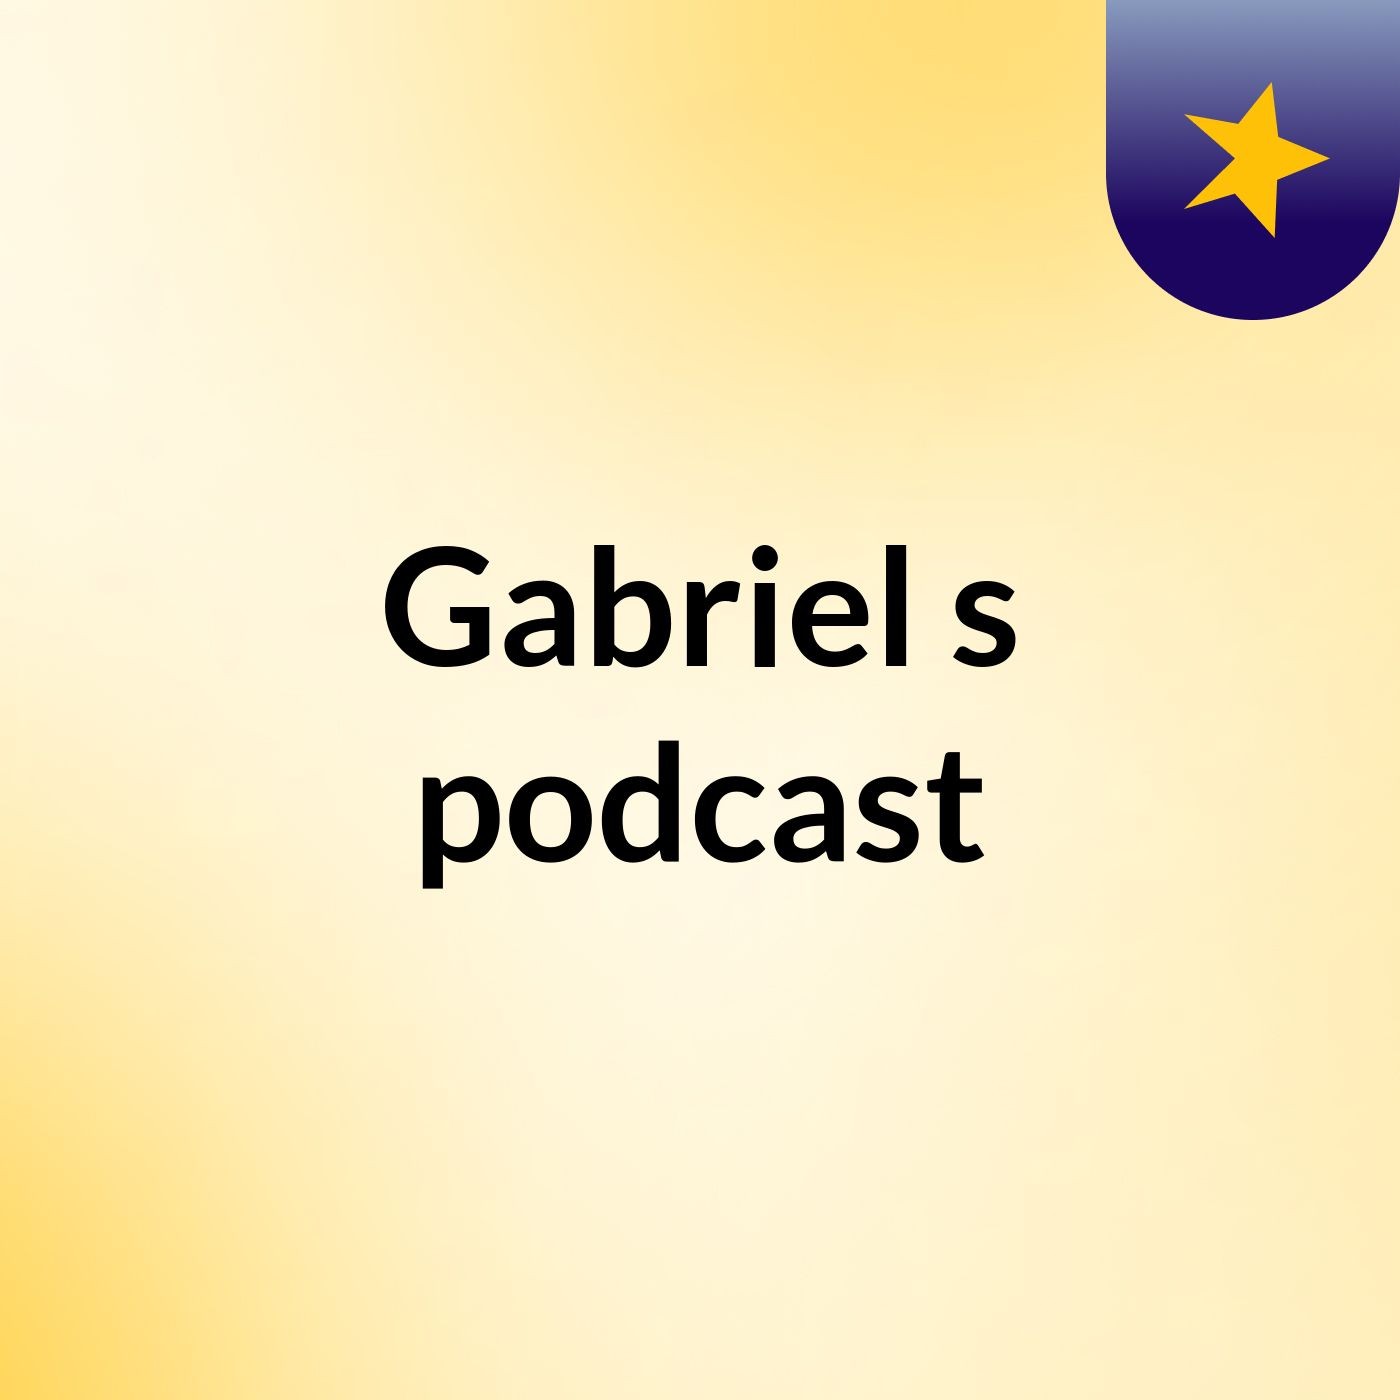 Episode 1 - Gabriel's podcast